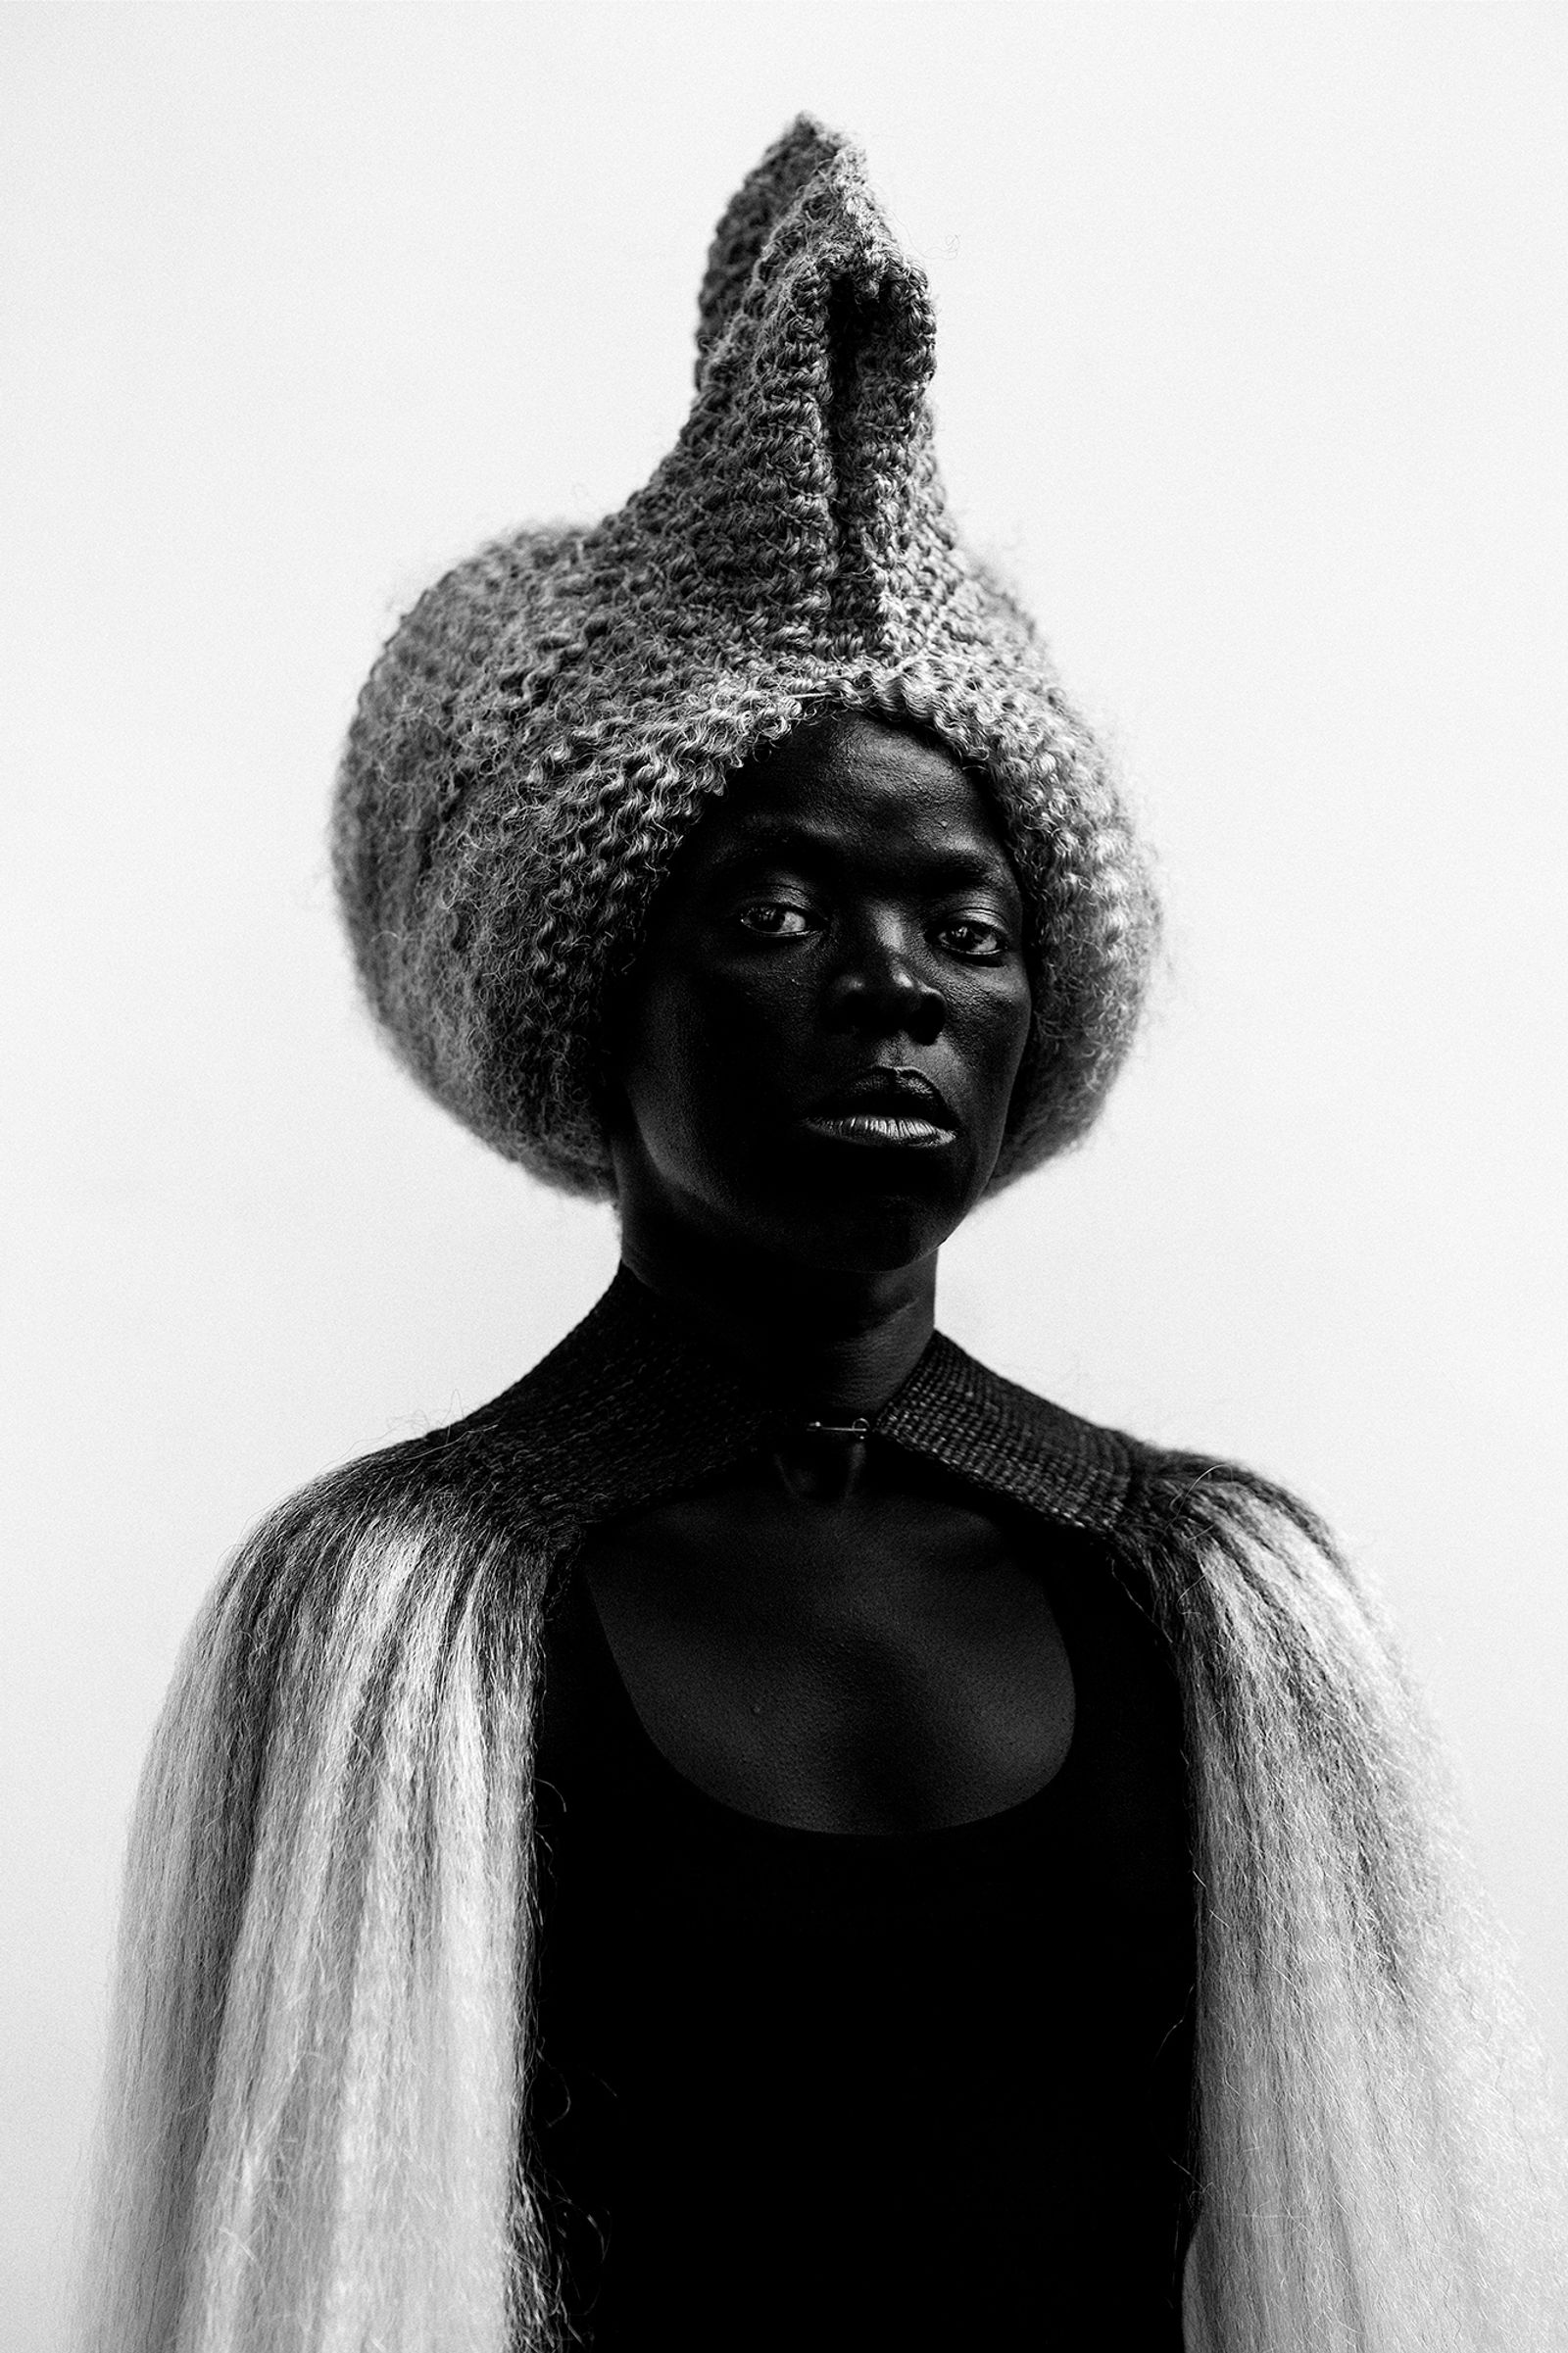 © Zanele Muholi, courtesy of Stevenson Gallery, Cape Town/Johannesburg, and Yancey